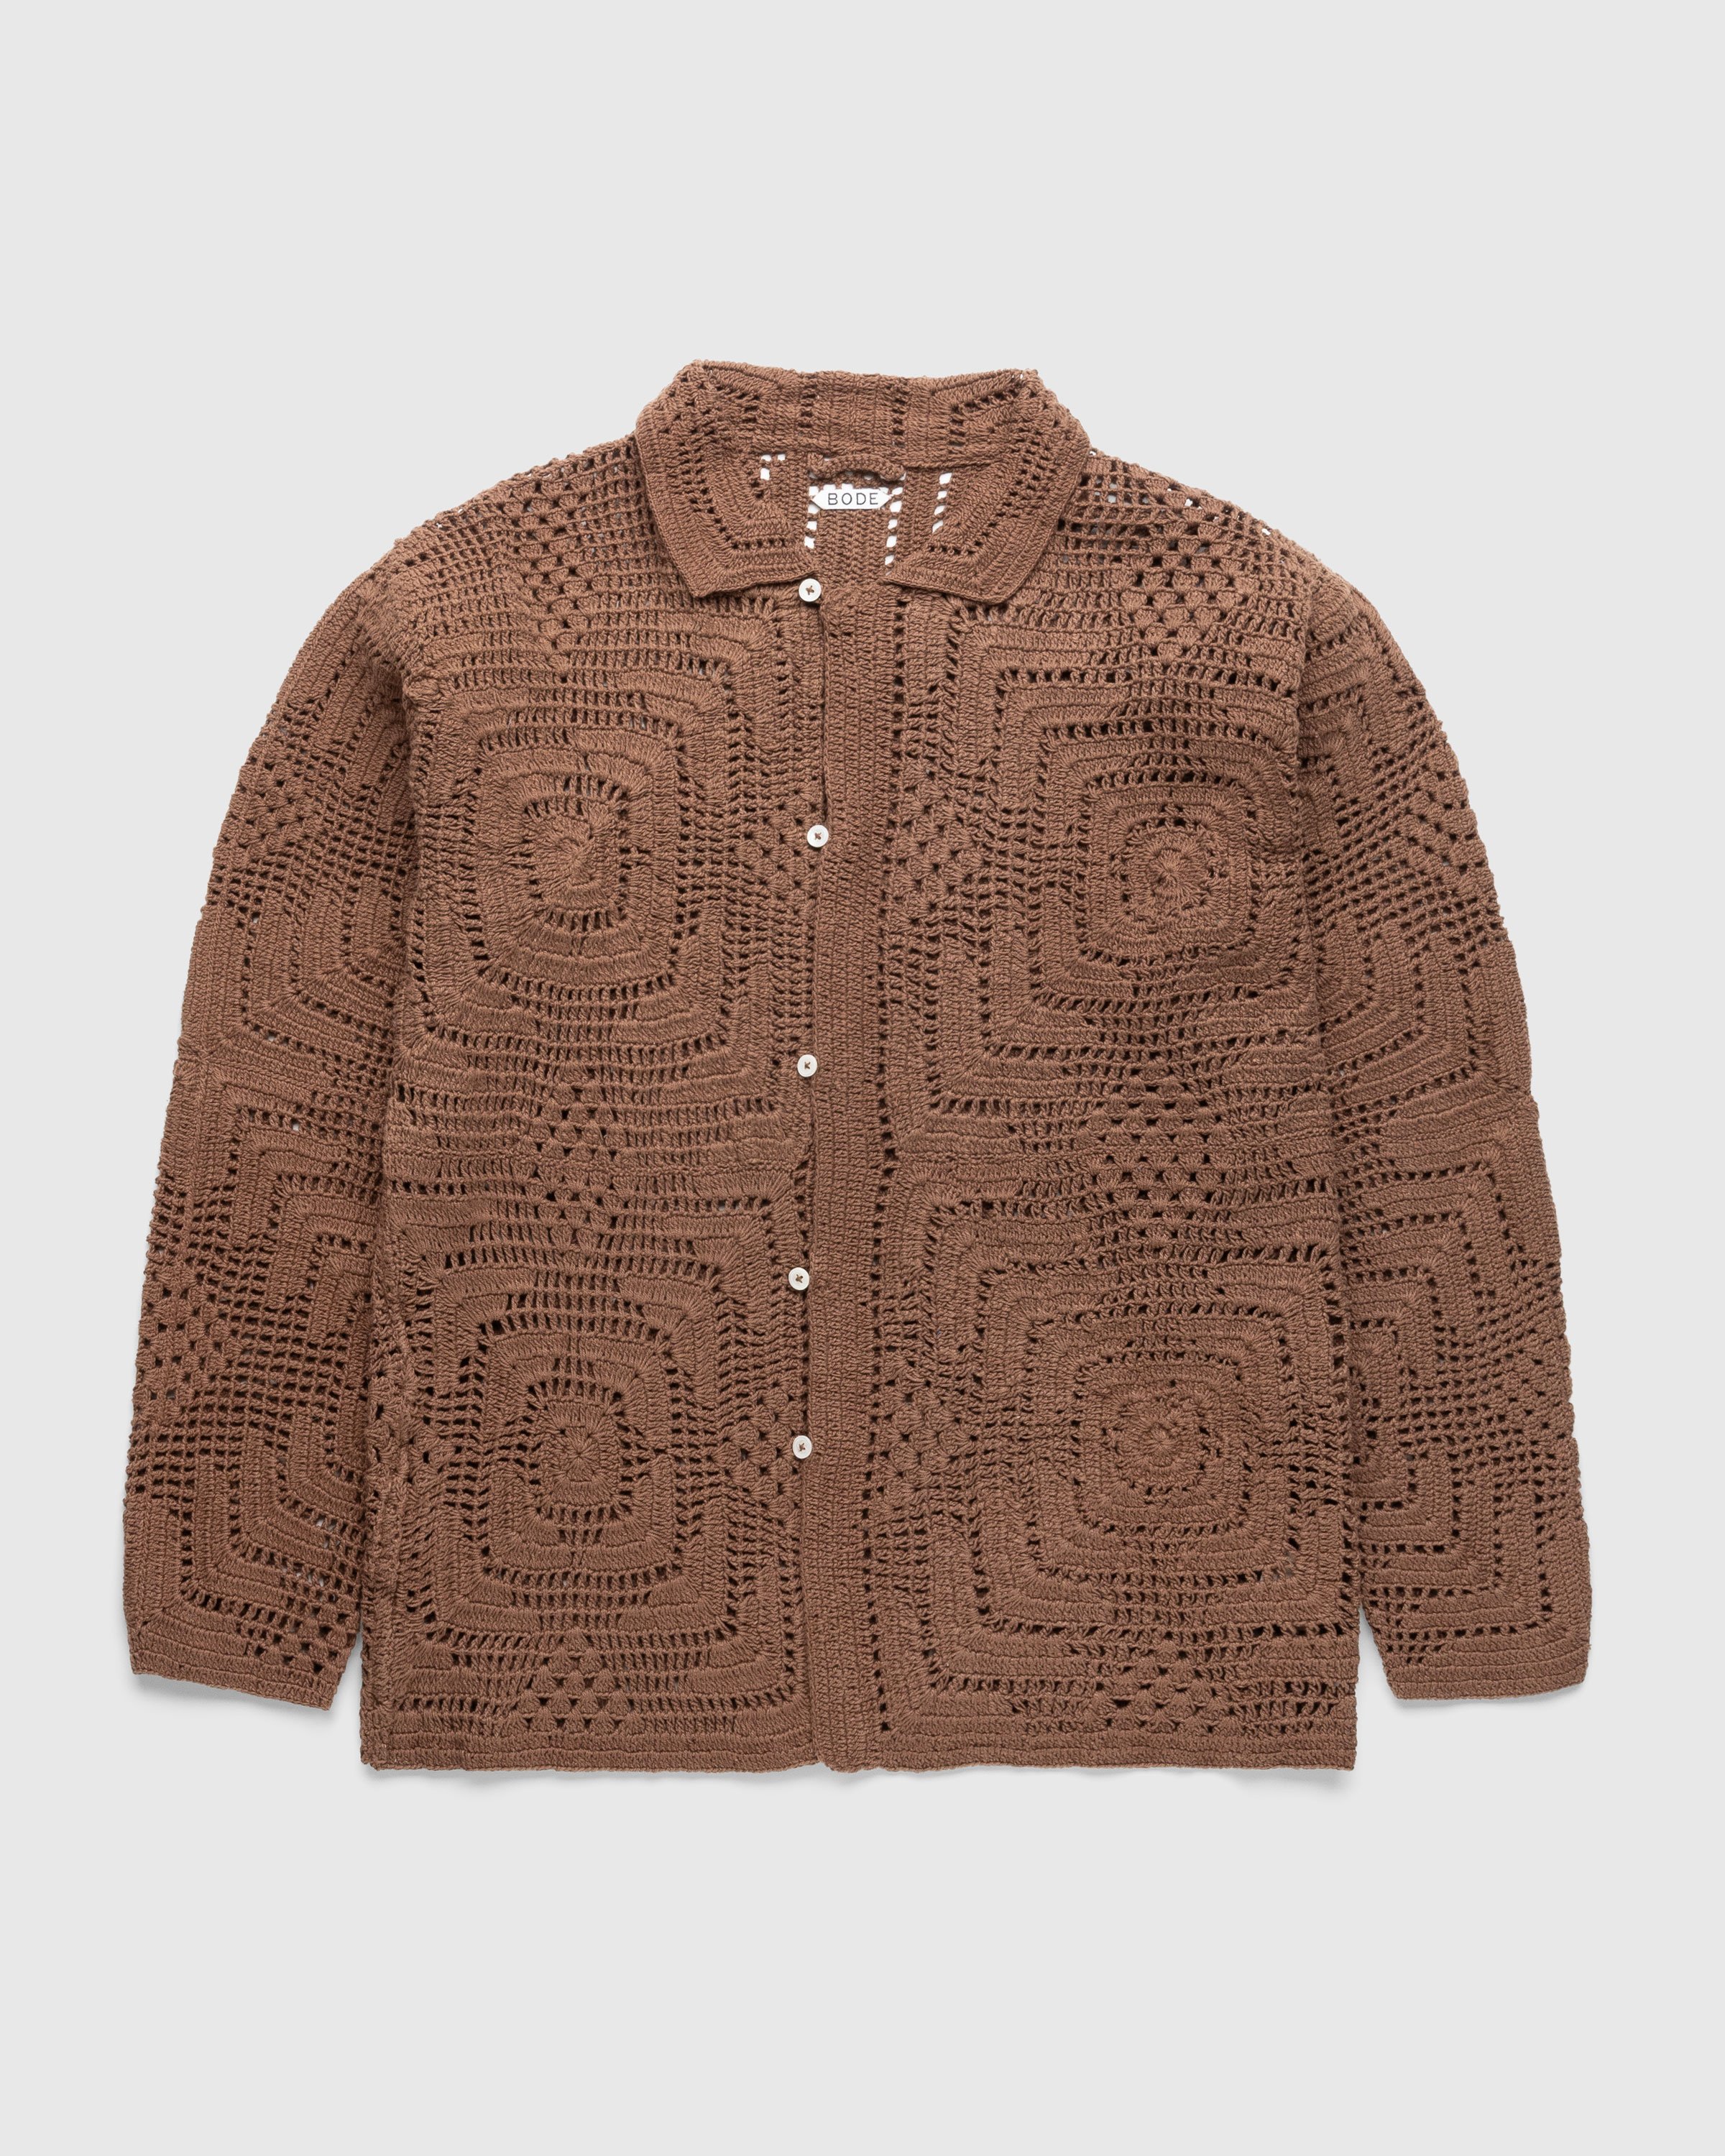 Bode - Overdye Crochet Shirt Brown - Longsleeve Shirts - BROWN - Image 1